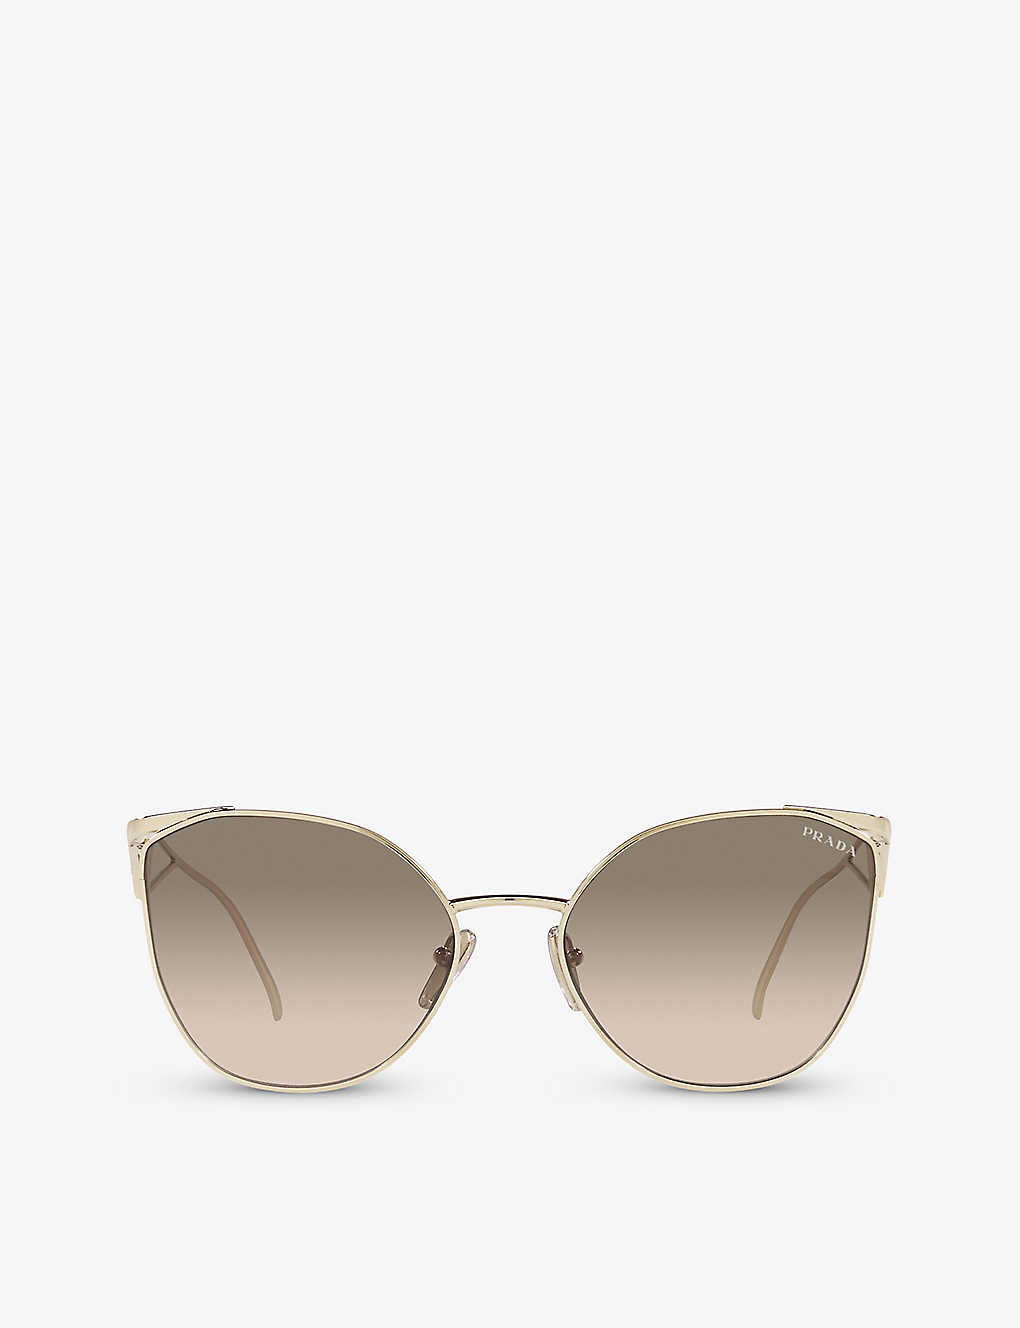 Prada Woman Sunglasses Pr 50zs In Brown / Gold